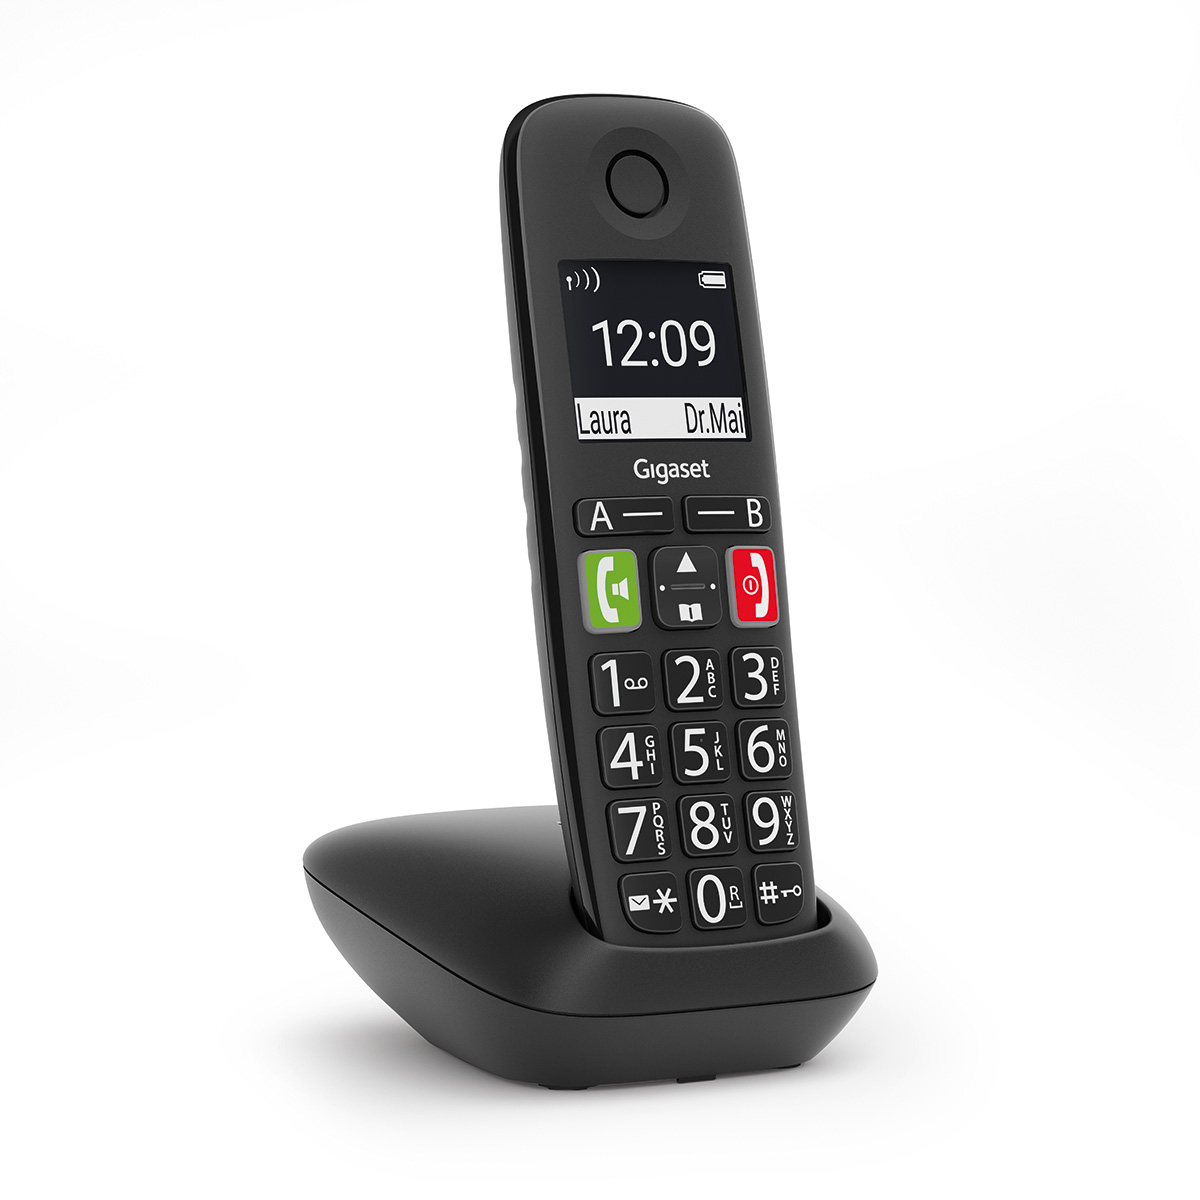 the big-button phone cordless, E290 Buy Gigaset